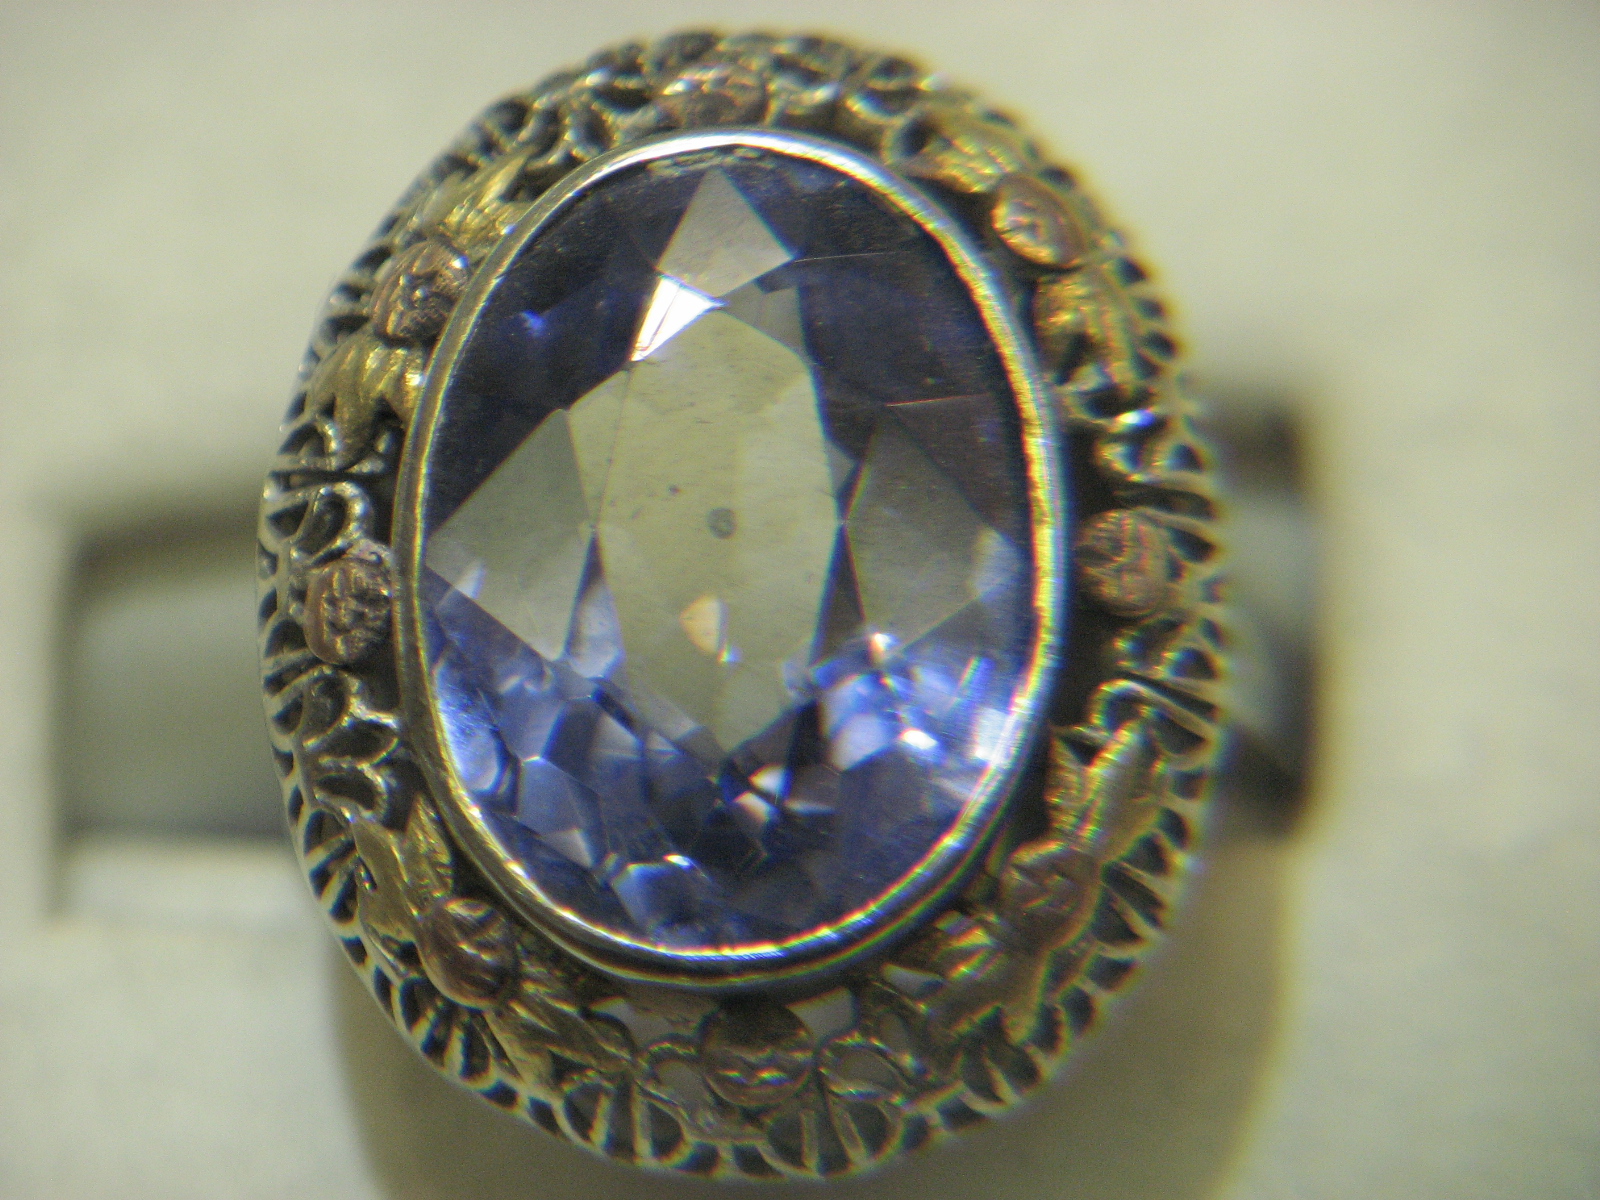 victorian sapphire ring. Nobel Antique jewelry Store, Santa Monica. Made in America. Circa 1880s.